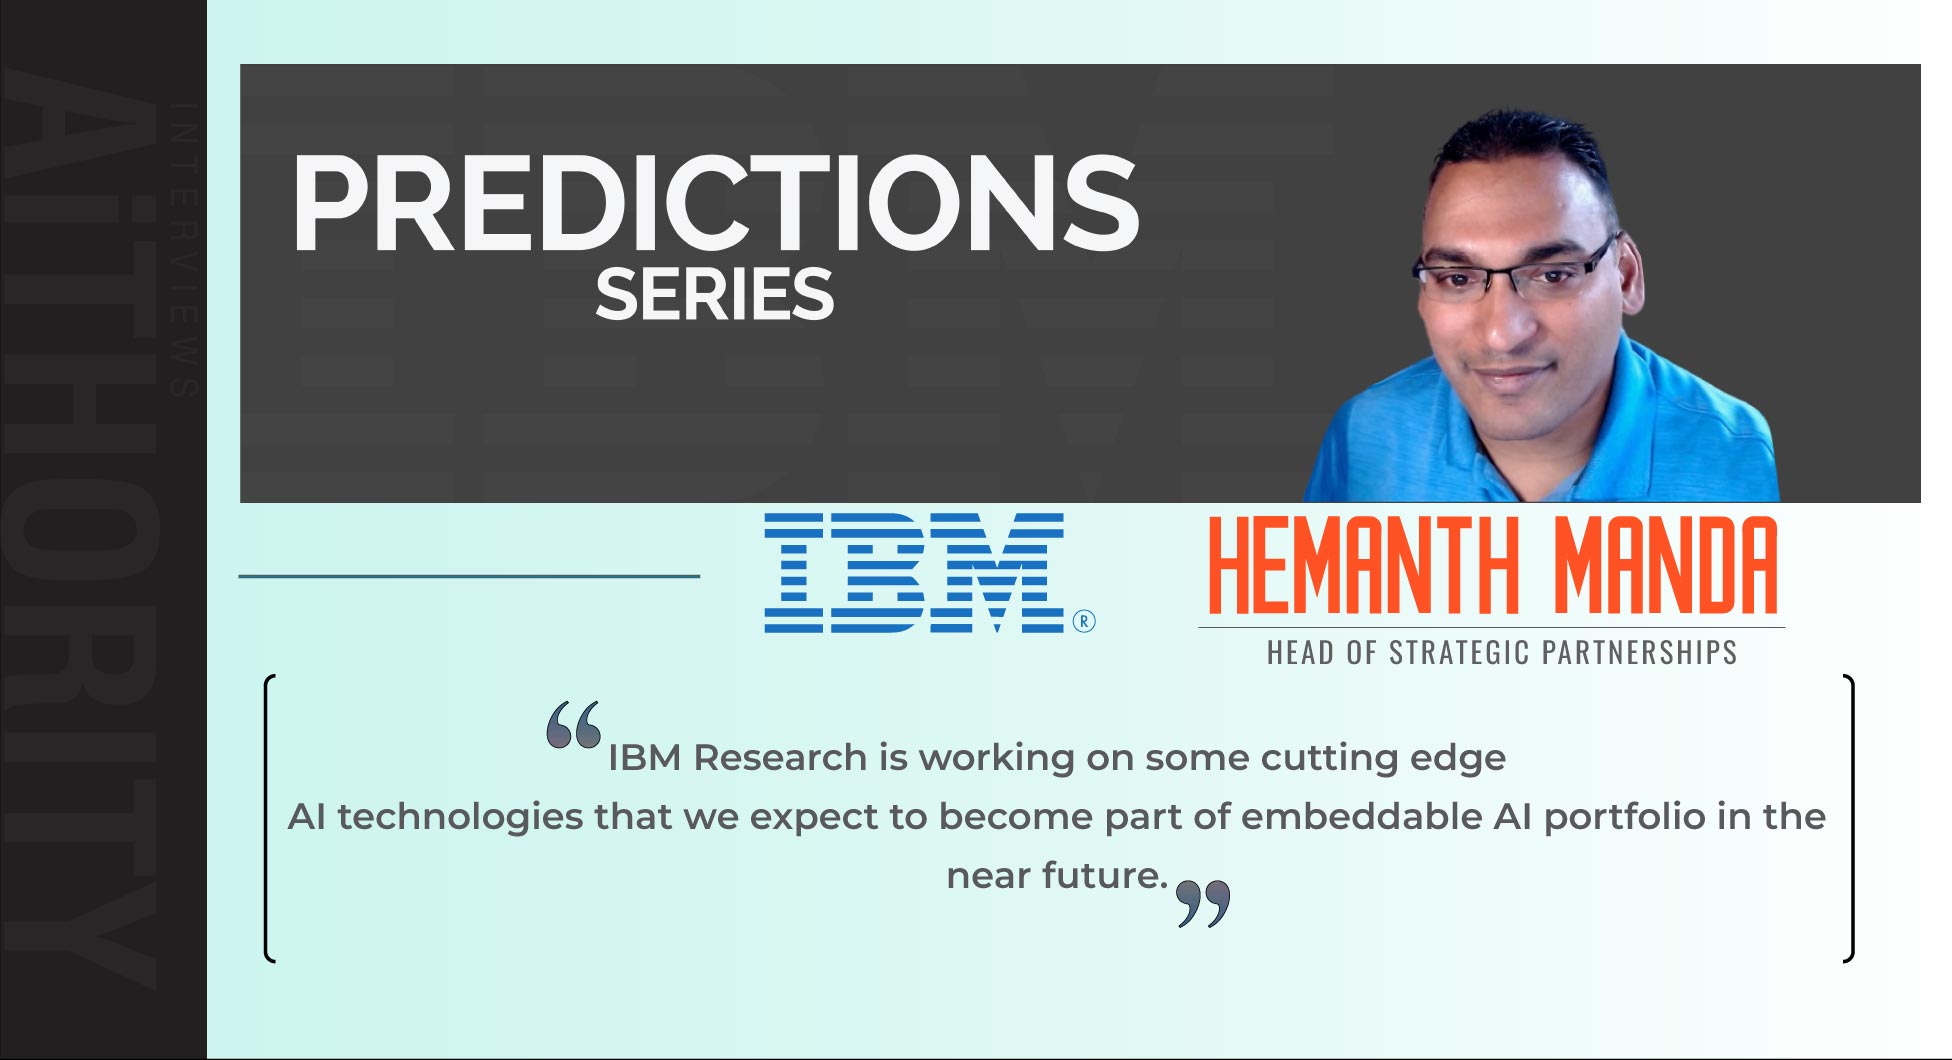 Hemanth Manda, Head of Strategic Partnerships at IBM